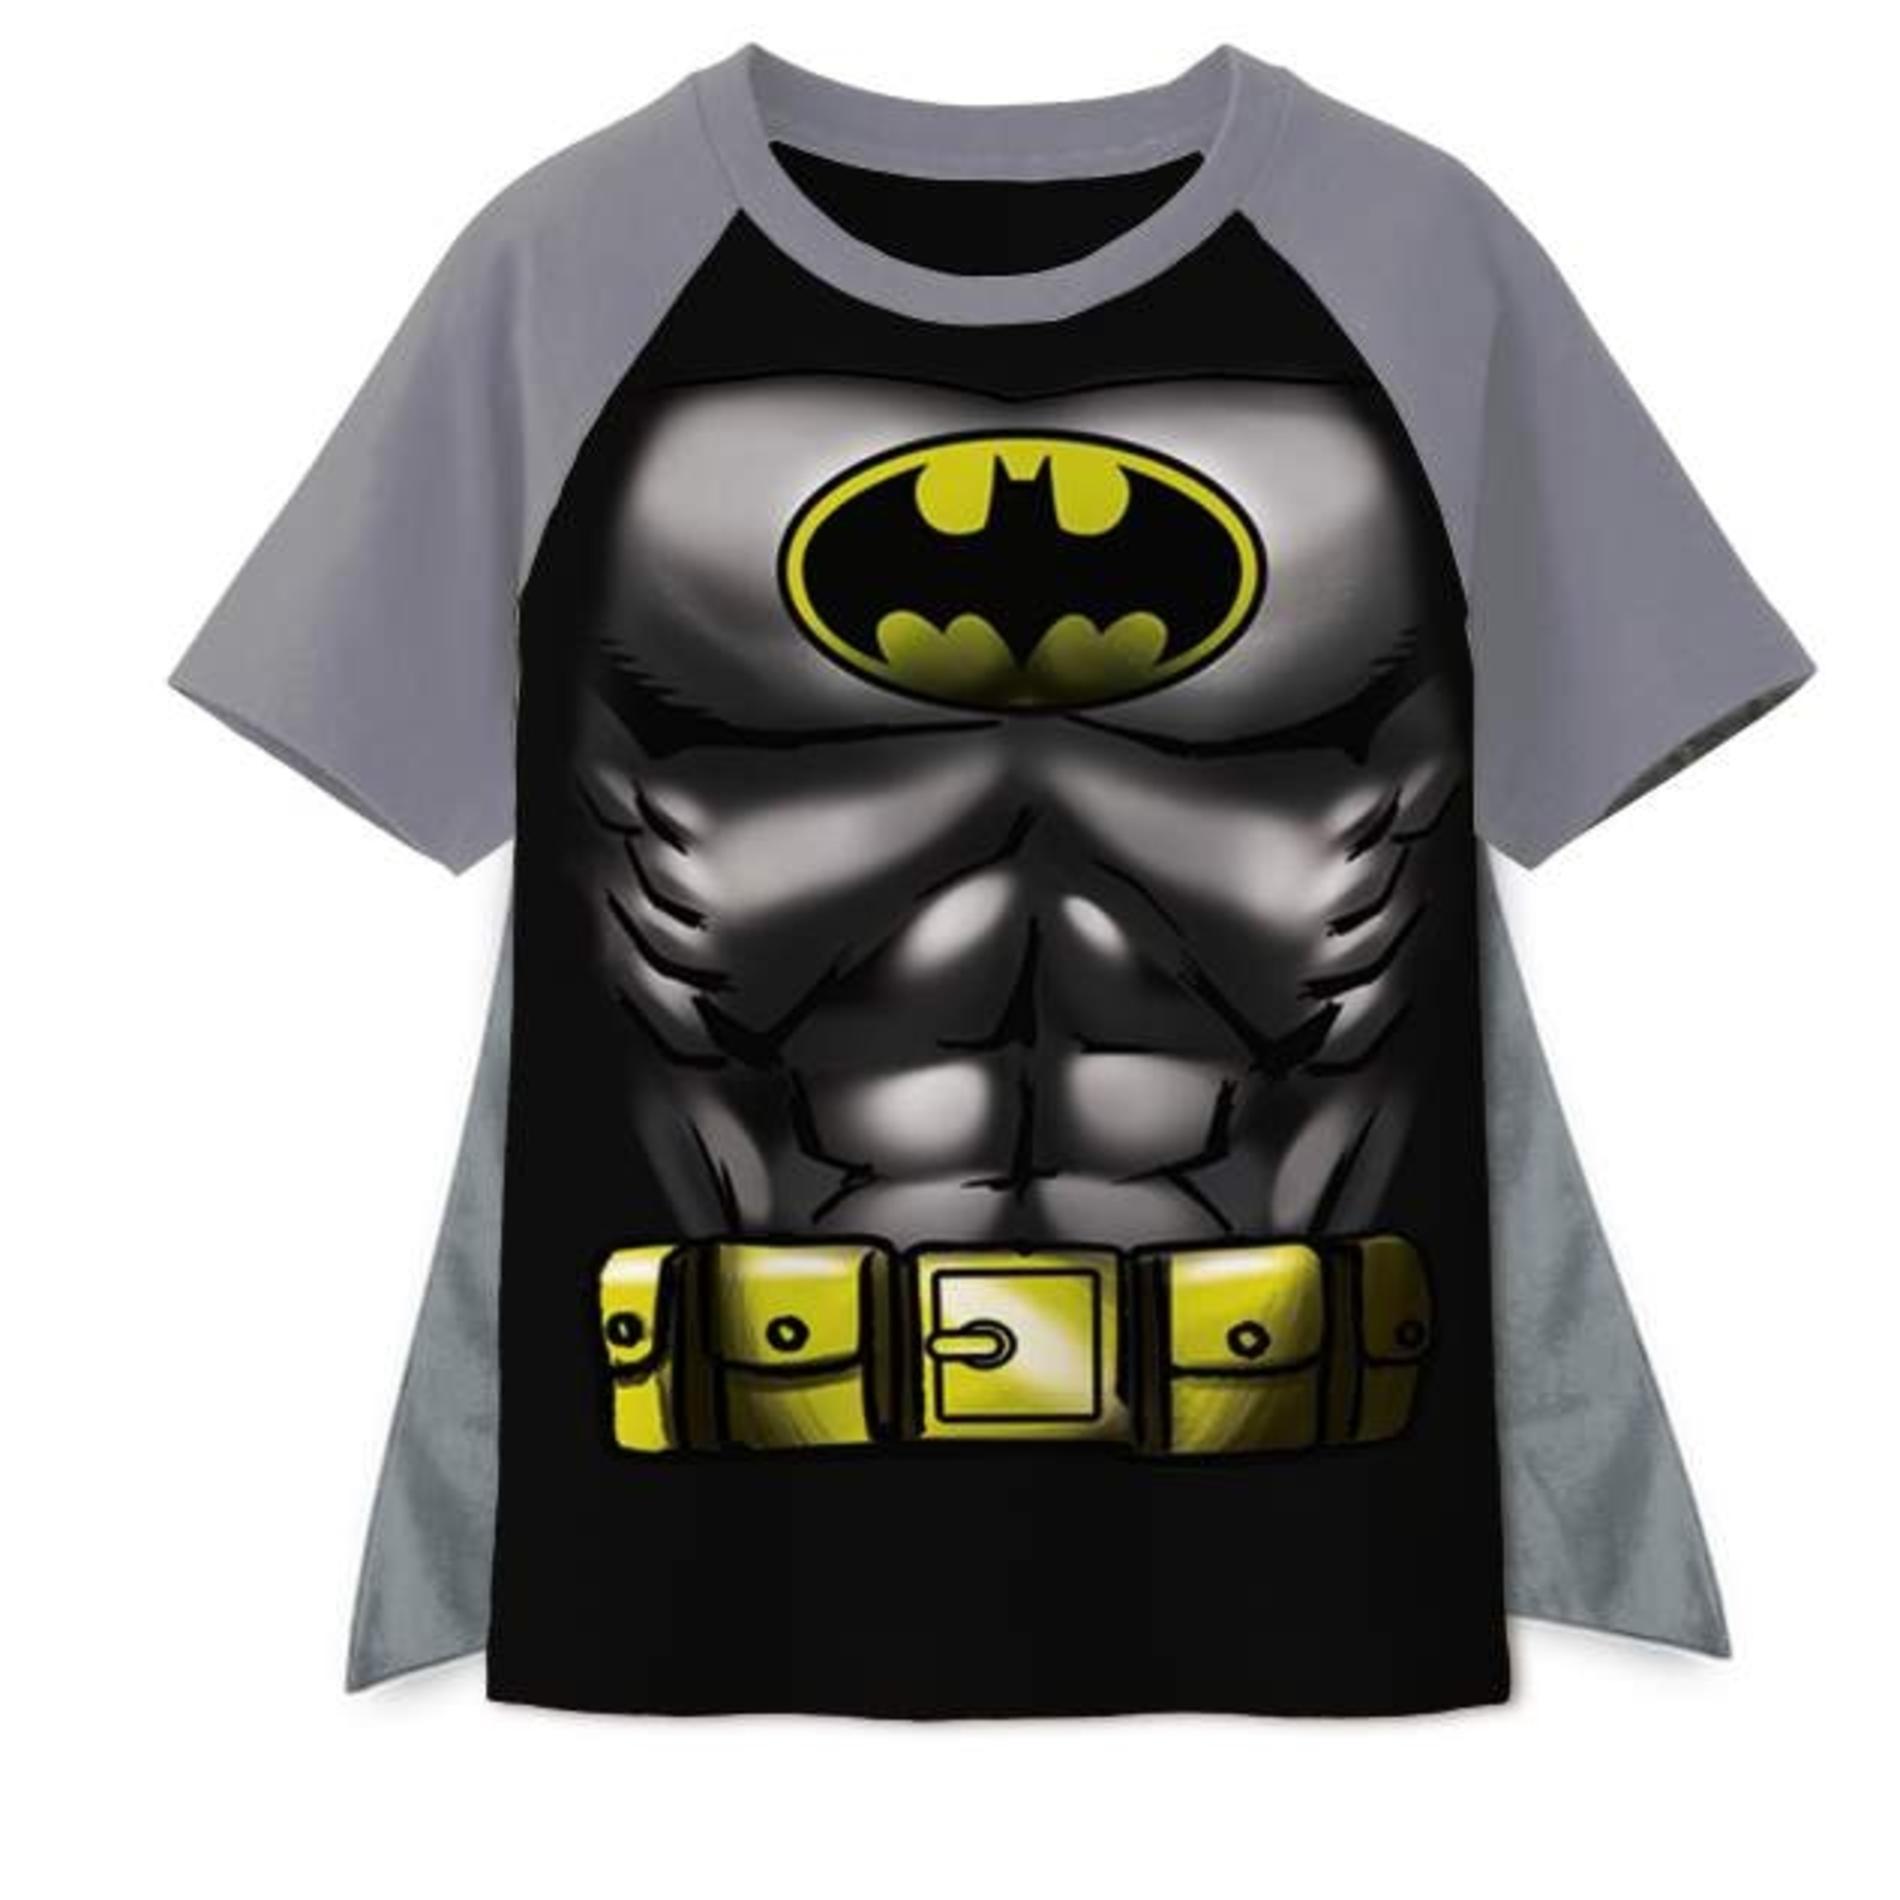 DC Comics Boy's Batman Graphic T-Shirt & Cape